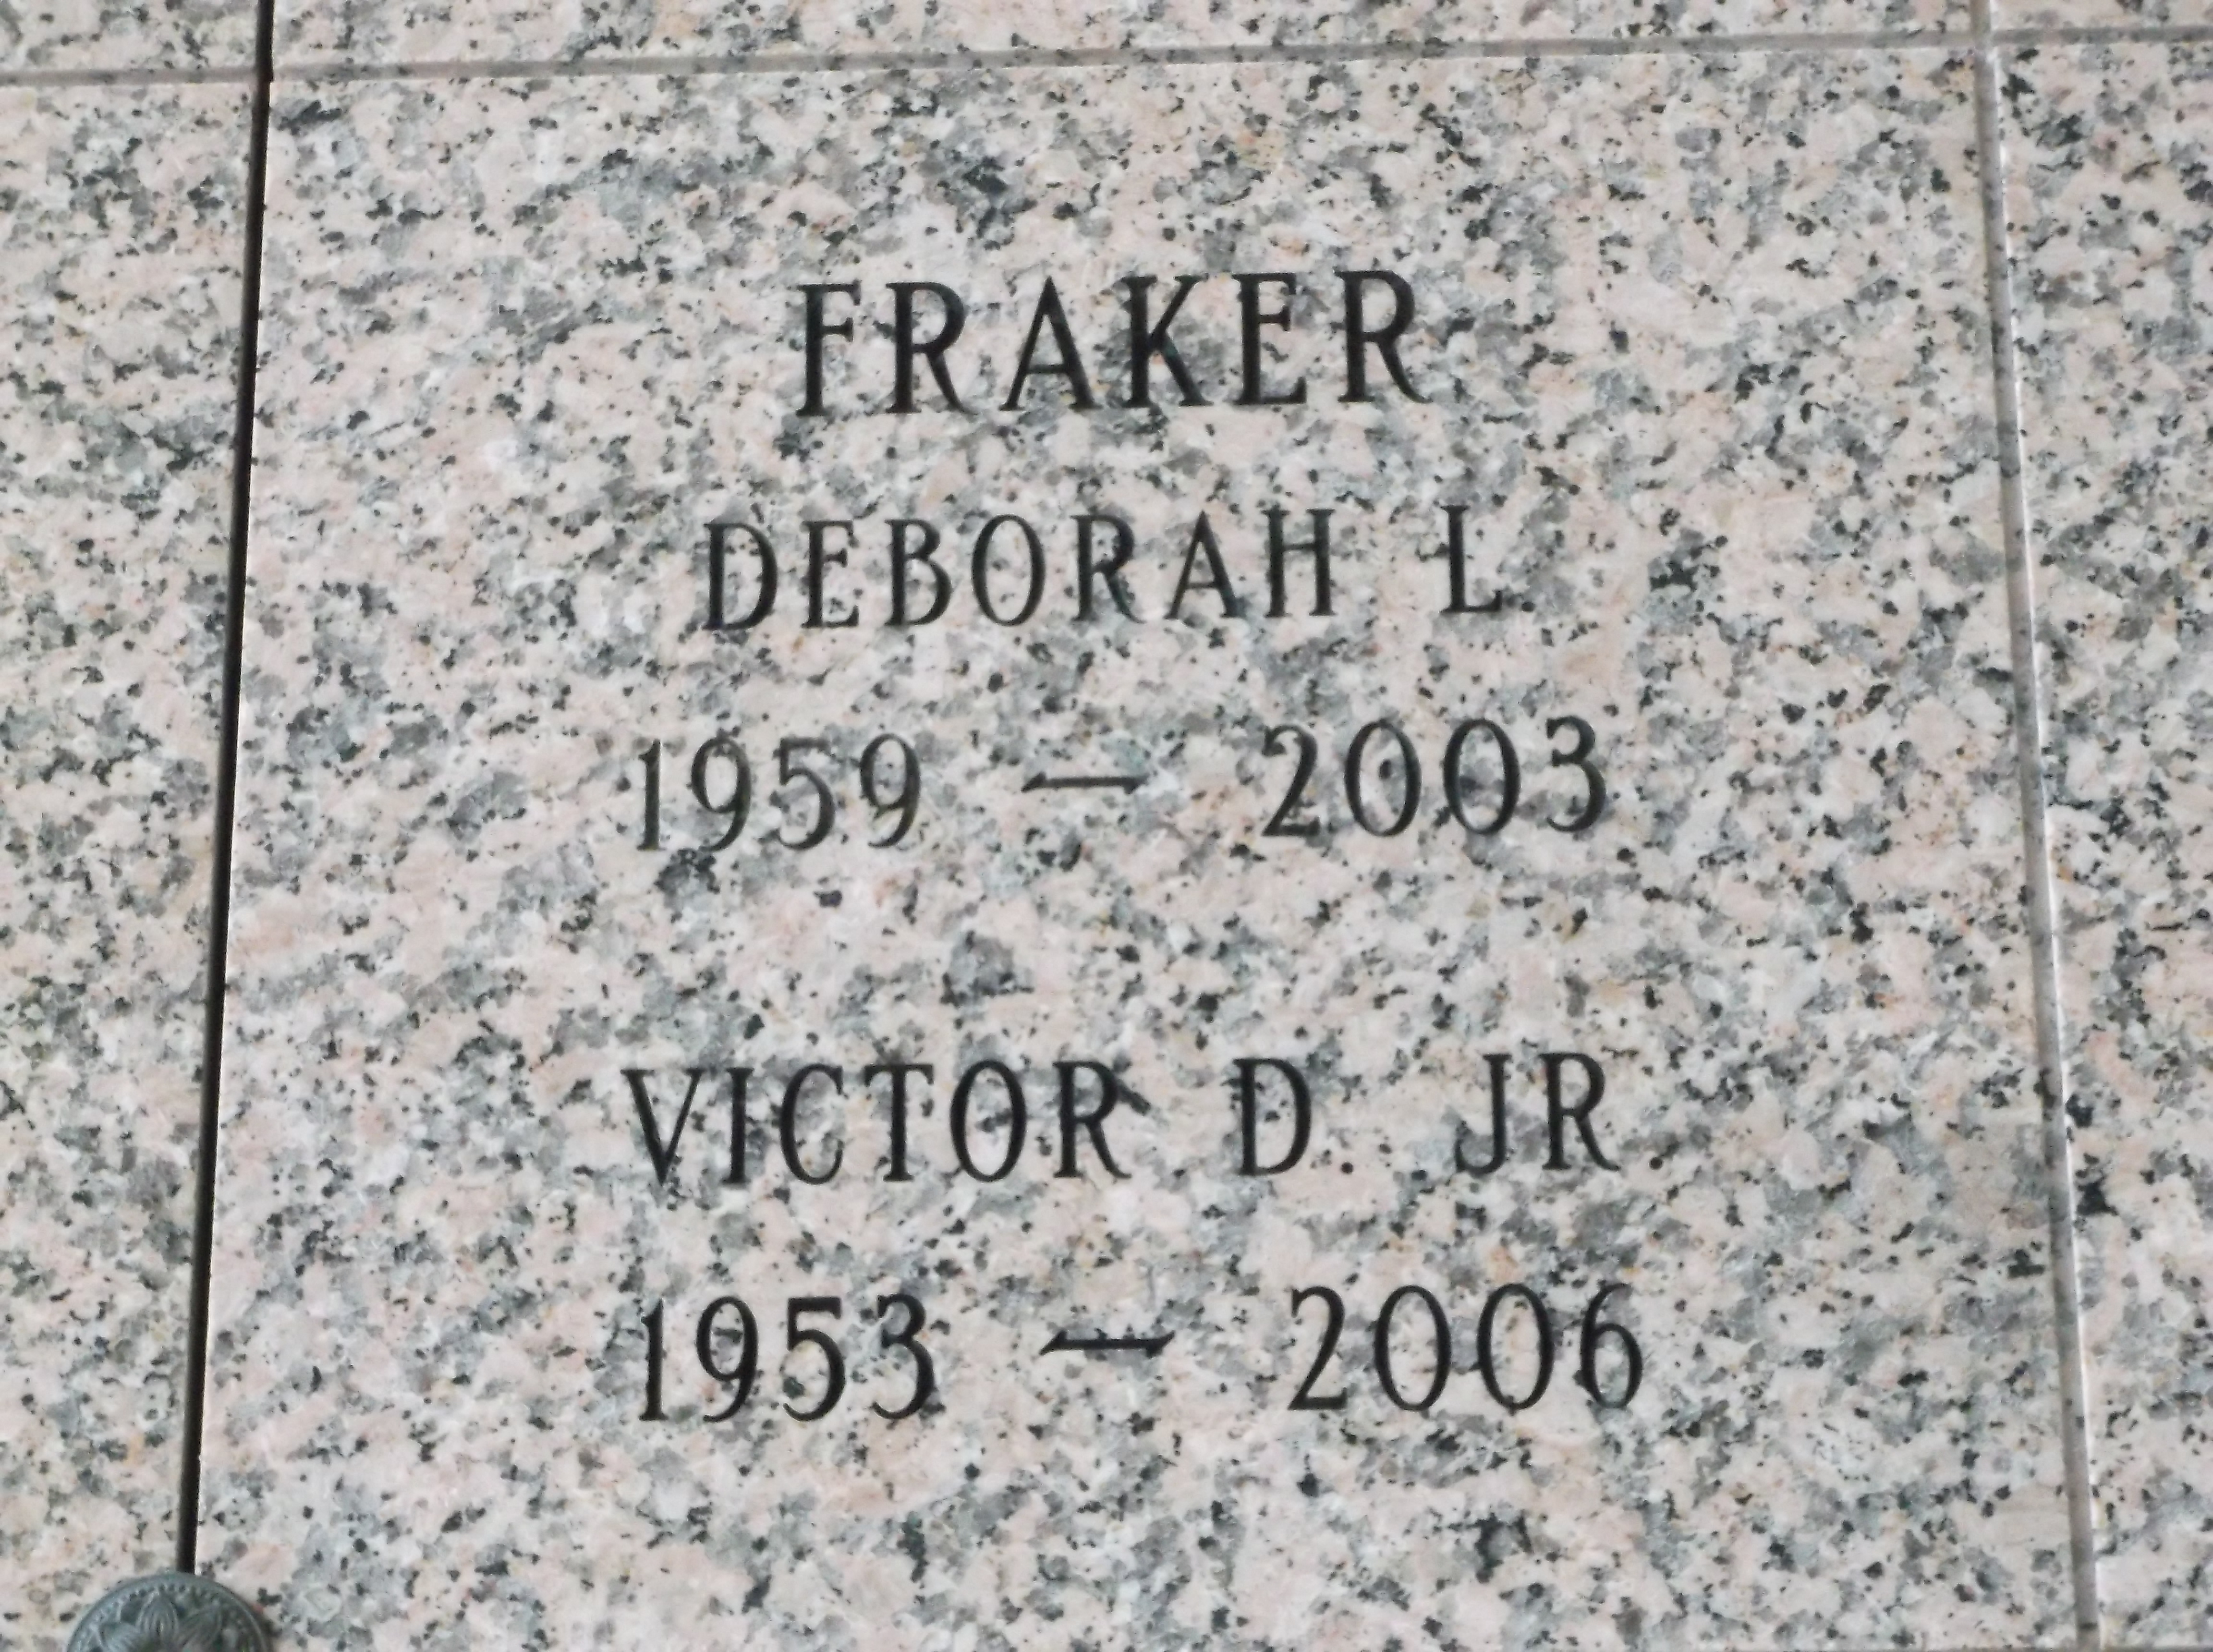 Deborah L Fraker